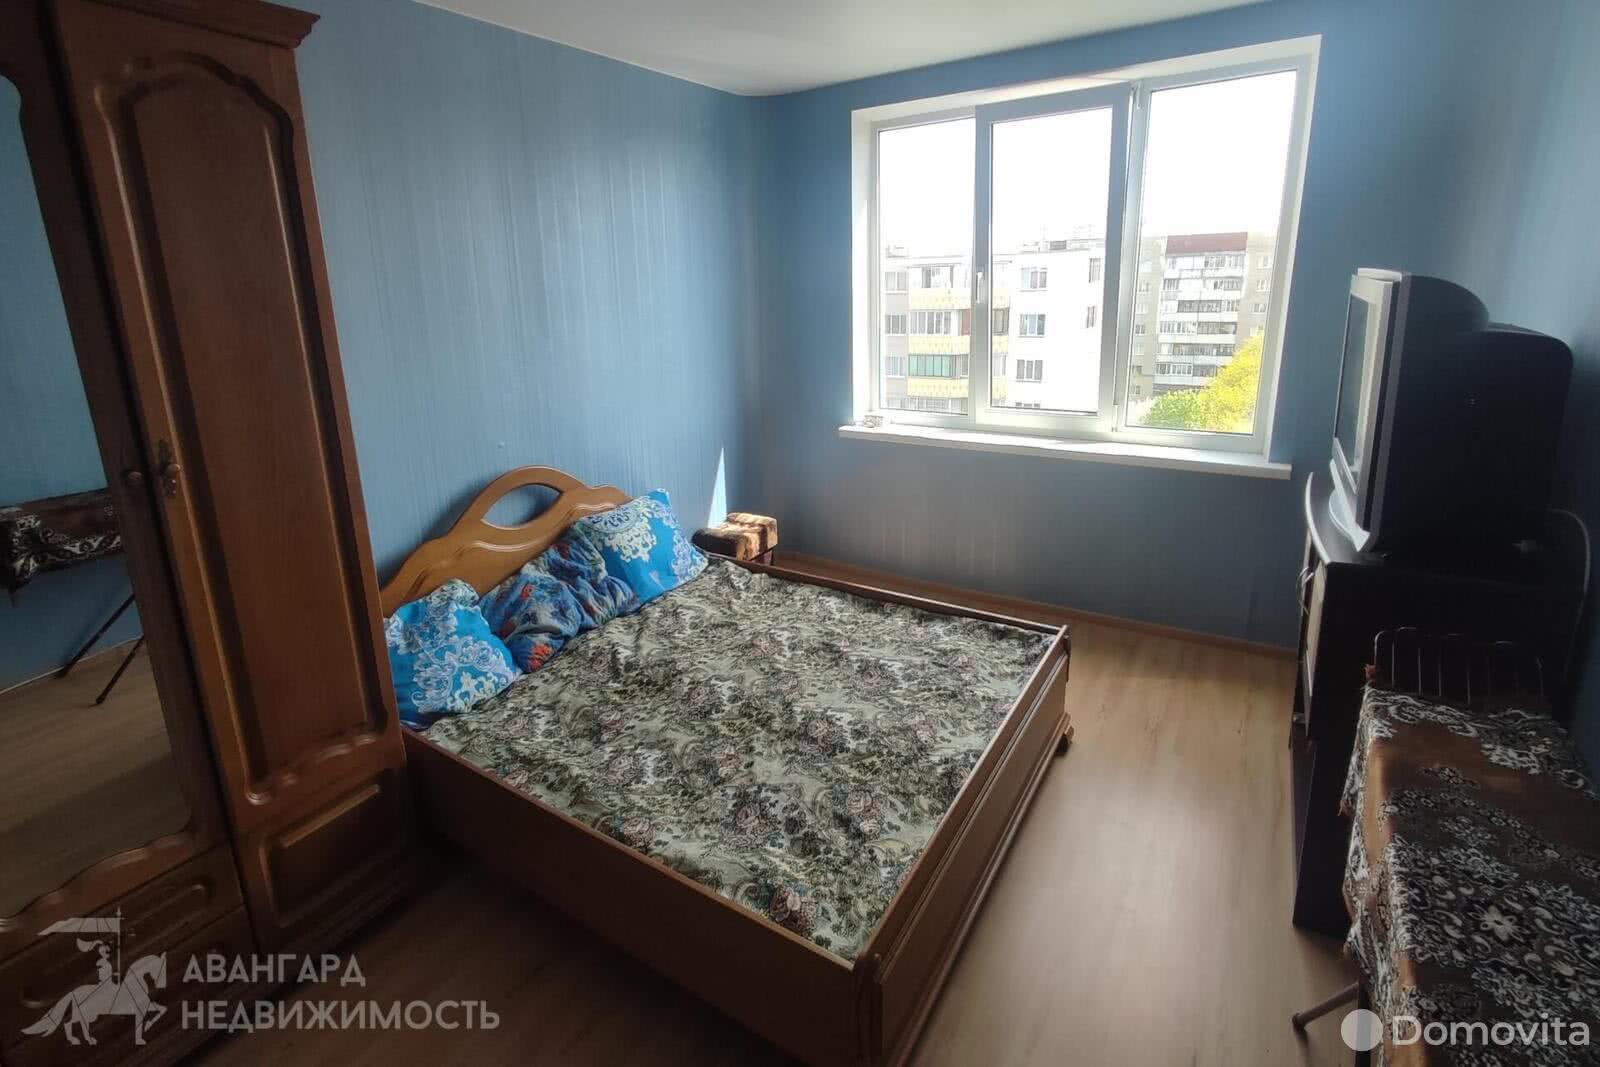 комната, Минск, ул. Ротмистрова, д. 6, стоимость продажи 88 457 р.